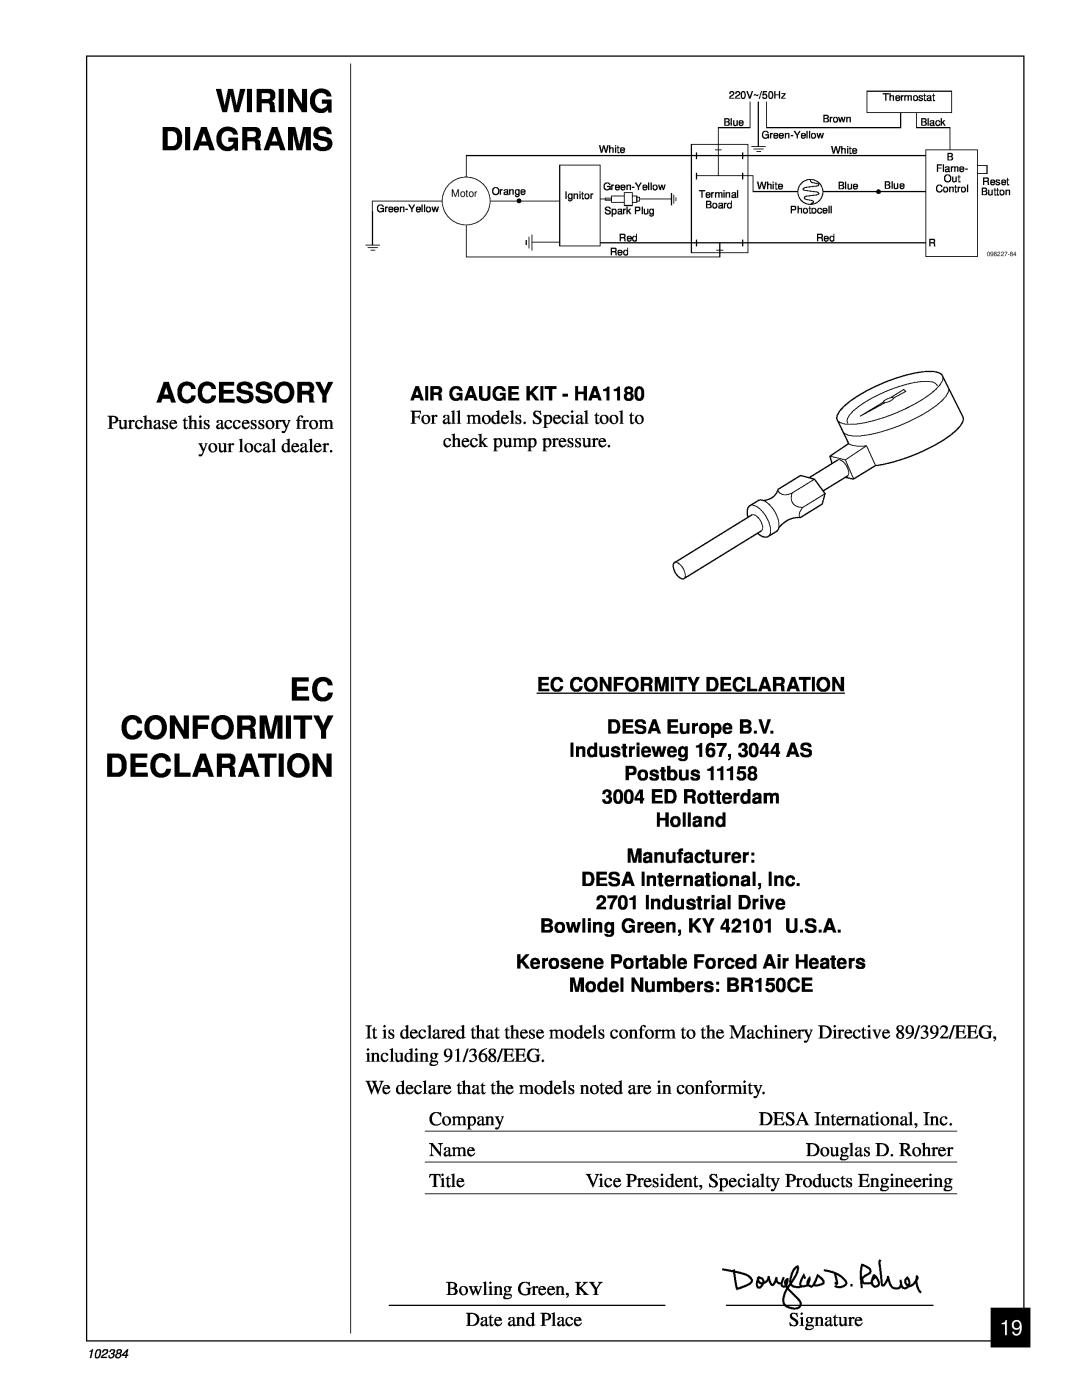 Master Lock Wiring Diagrams, Ec Conformity Declaration, Accessory, AIR GAUGE KIT - HA1180, Model Numbers BR150CE 